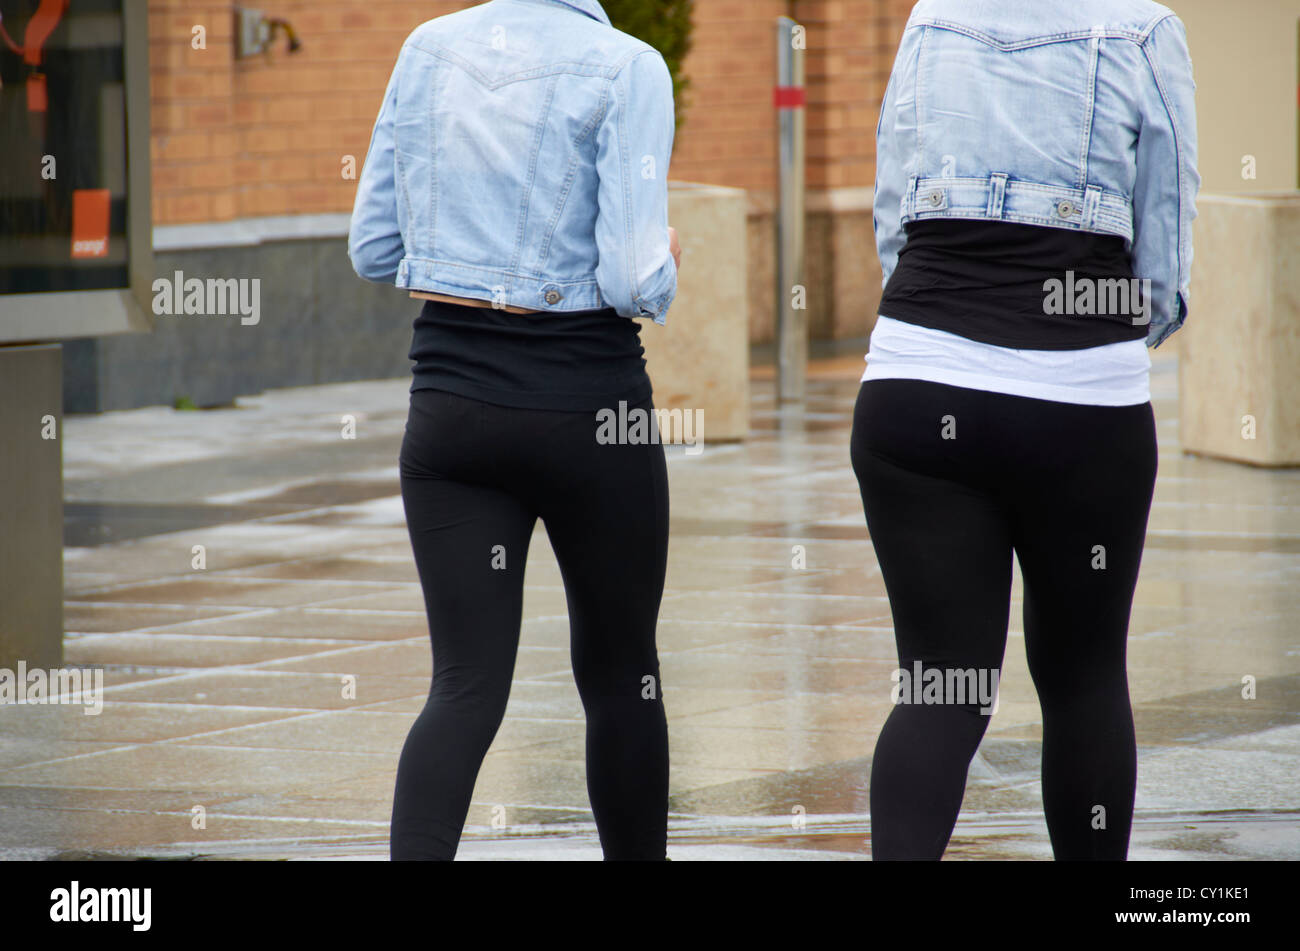 2 girls / women wearing black leggings & denim jackets Stock Photo